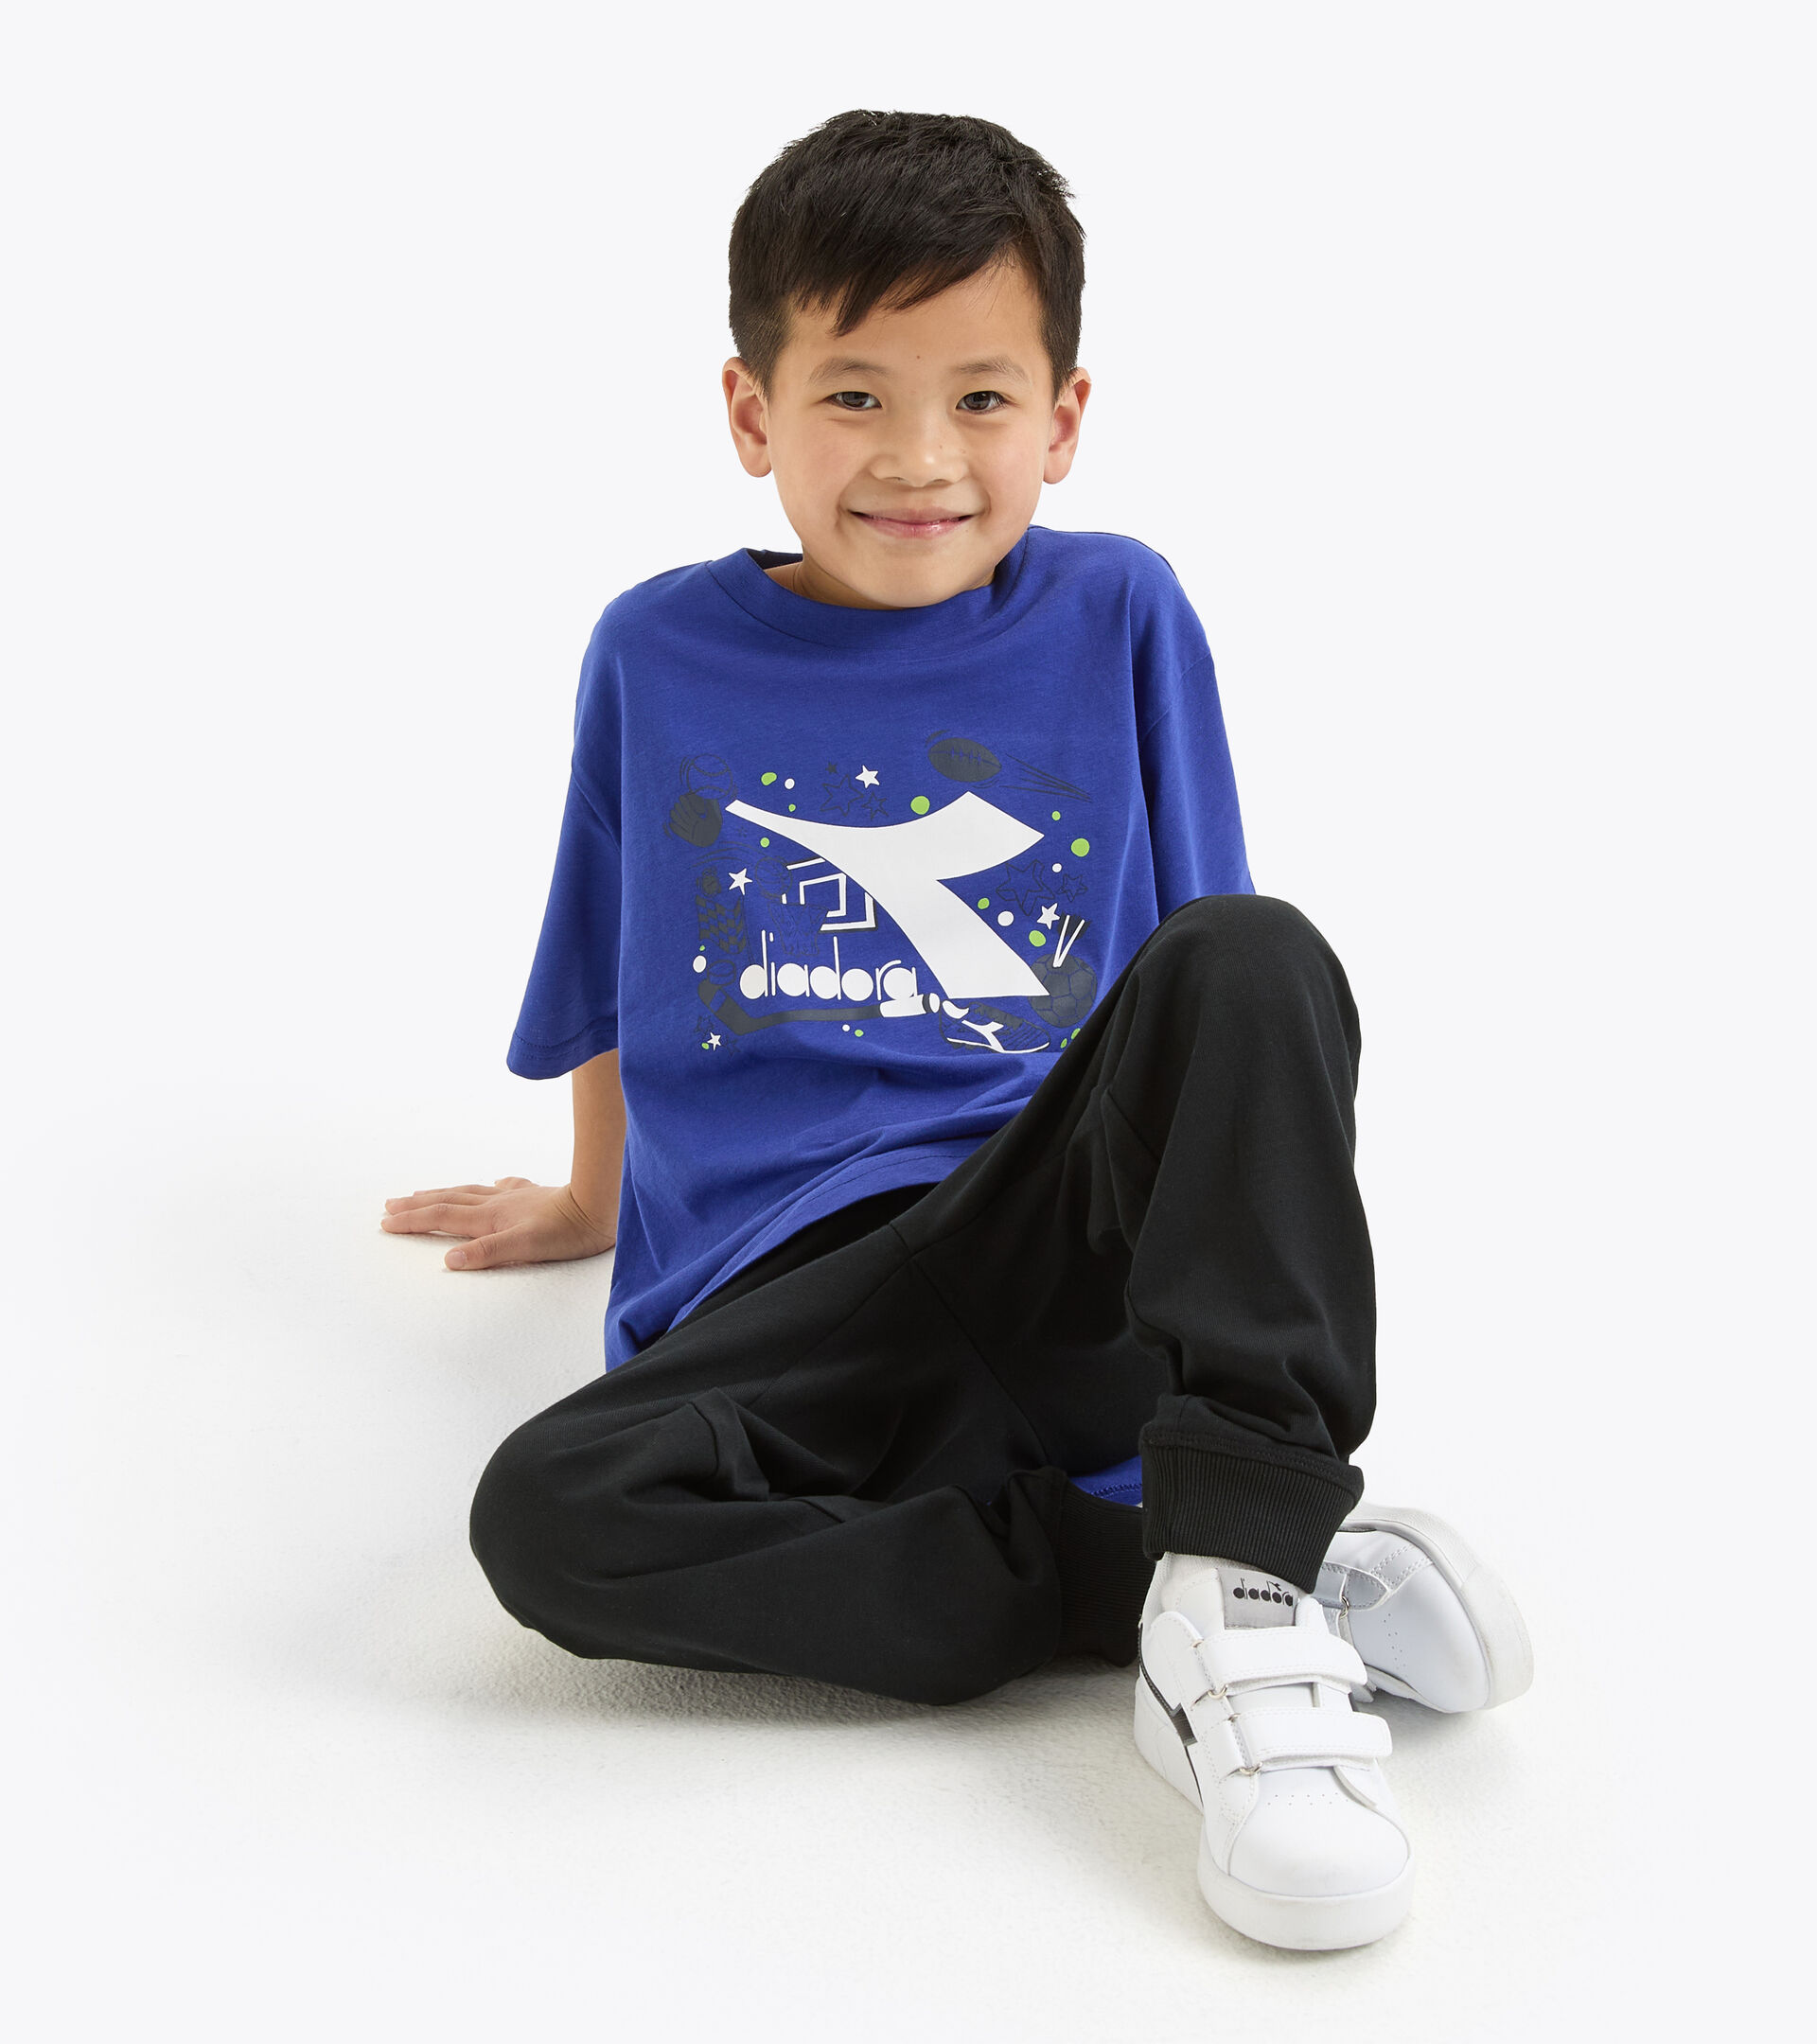 Camiseta deportiva - Niño JB. T-SHIRT SS NEON AZUL NAVEGAR EN LA WEB - Diadora